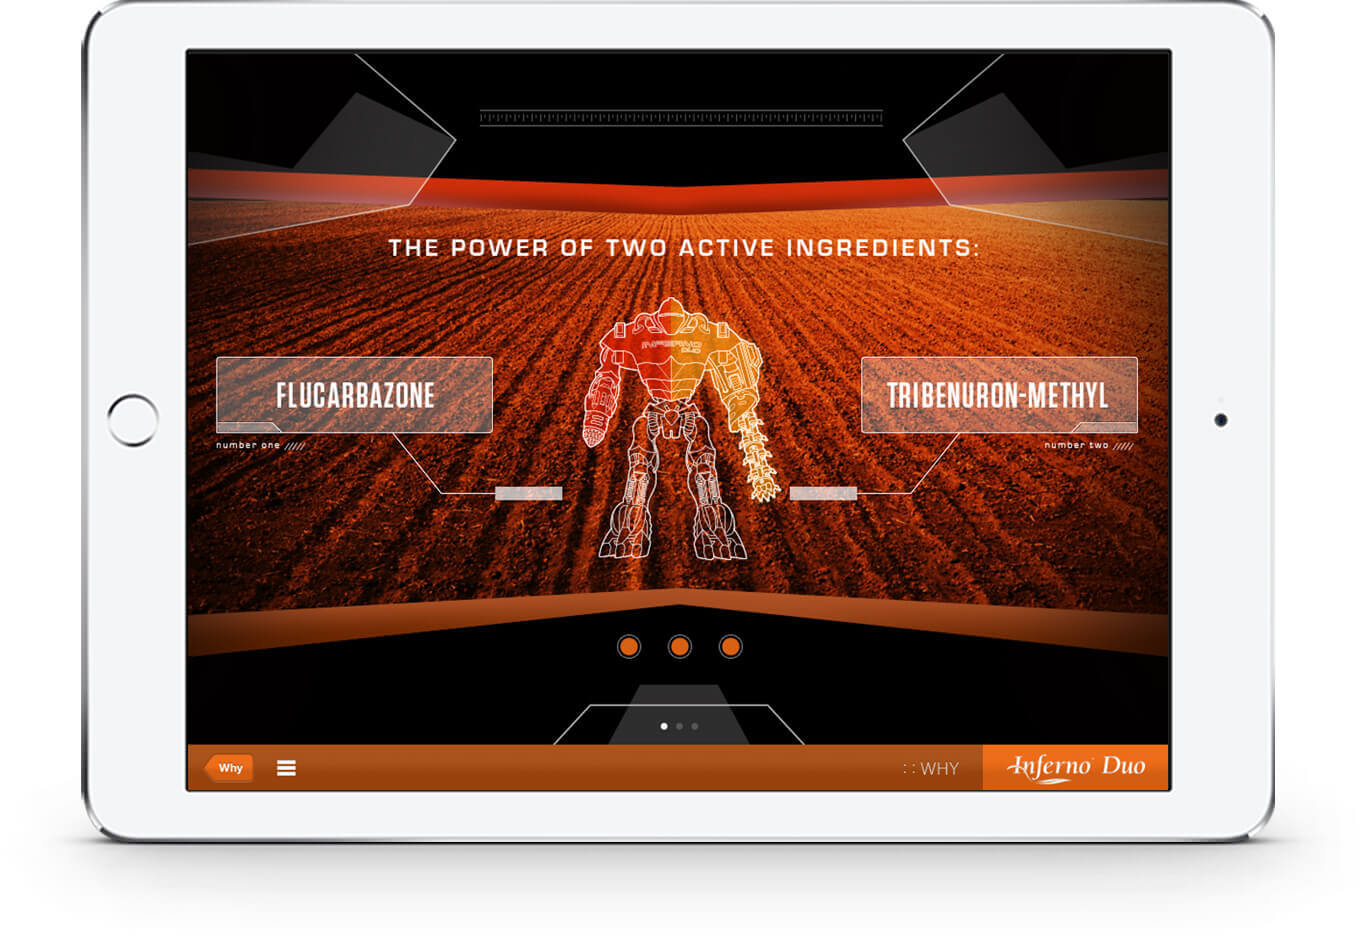 Arysta Lifescience Inferno Duo web application screen shot